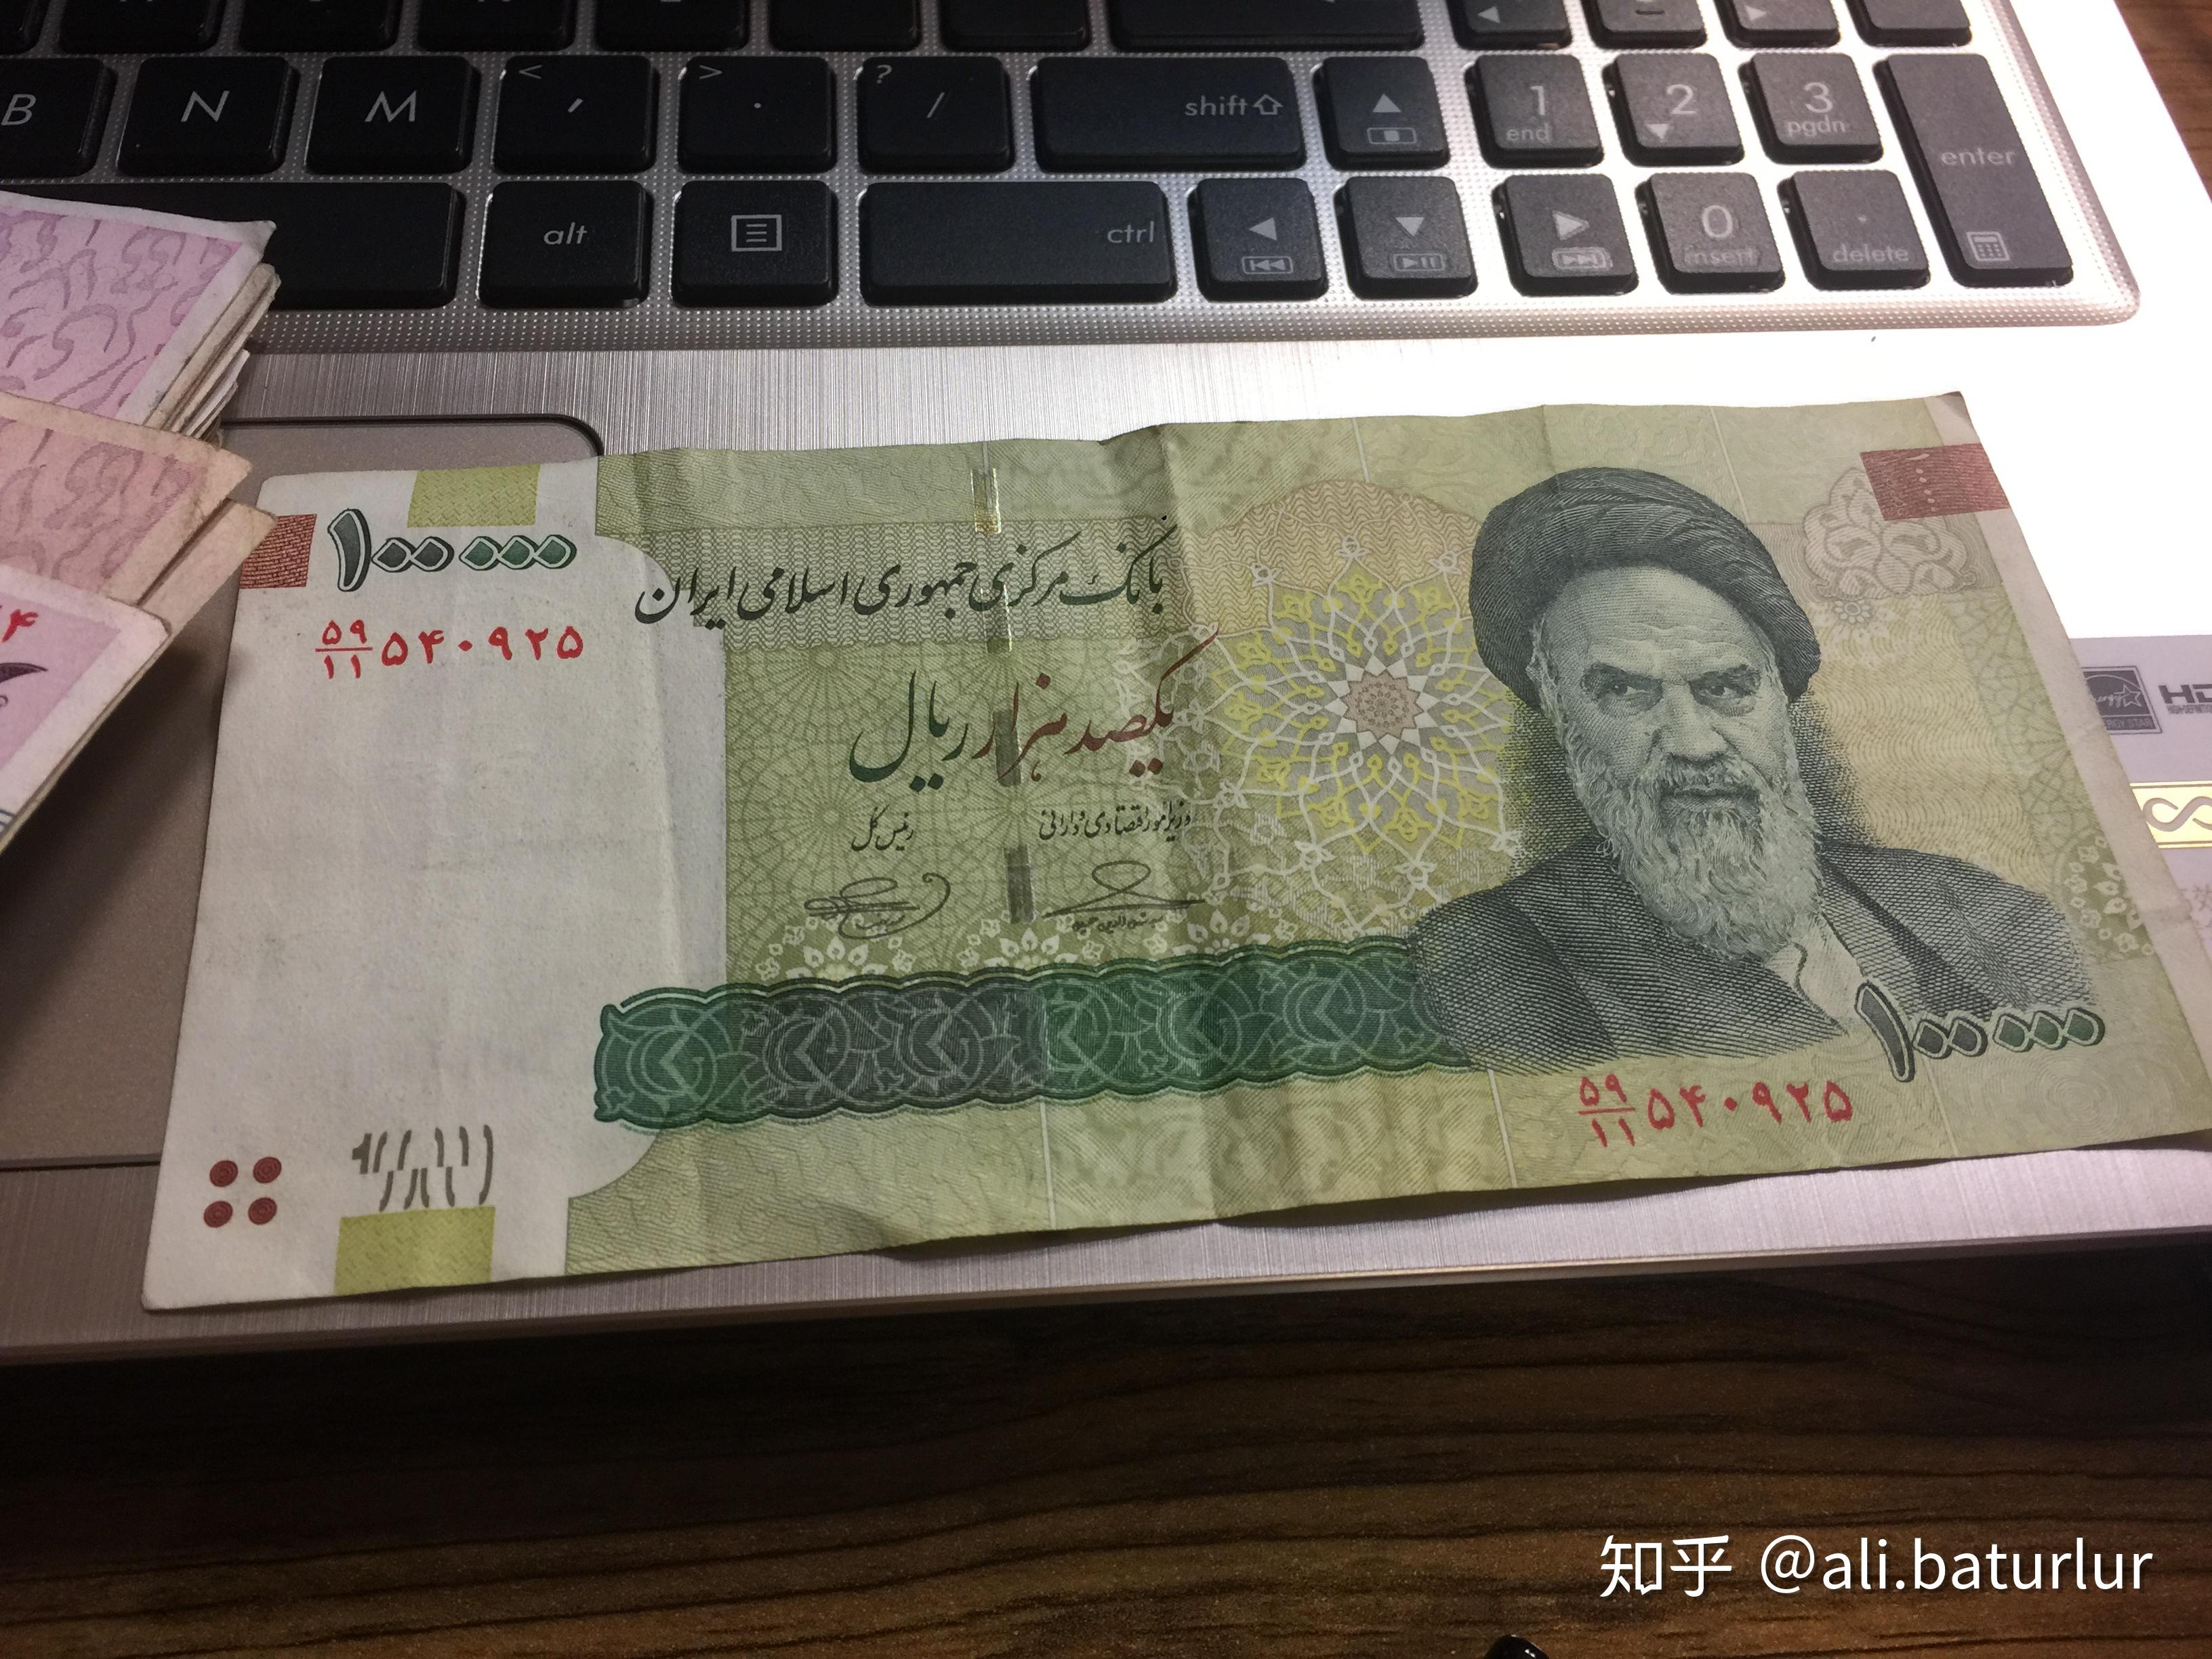 ST盛拓资讯 | 伊朗将人民币列为三大外汇货币取代美元位置 - 知乎